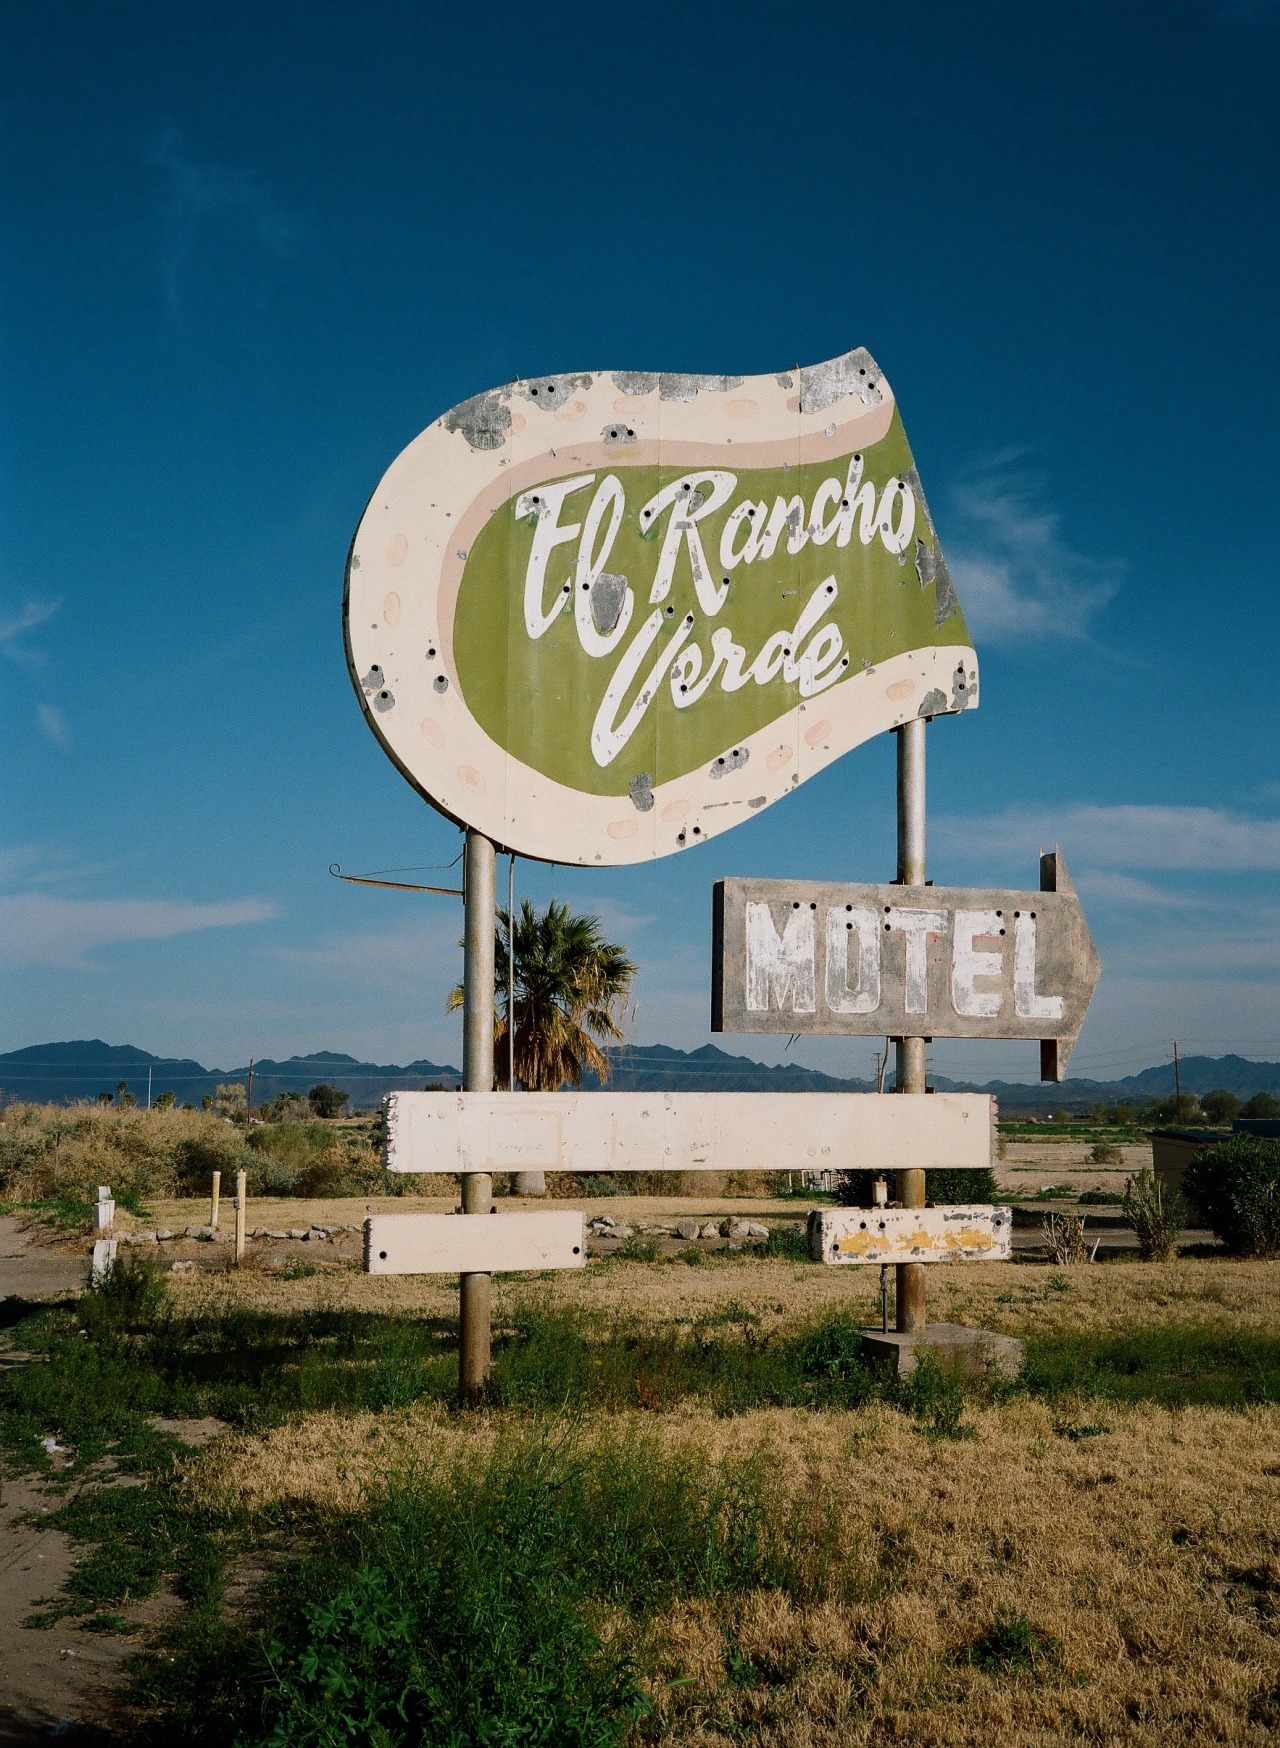 El Rancho Verde Motel - Blythe, California U.S.A. - February 26, 2013